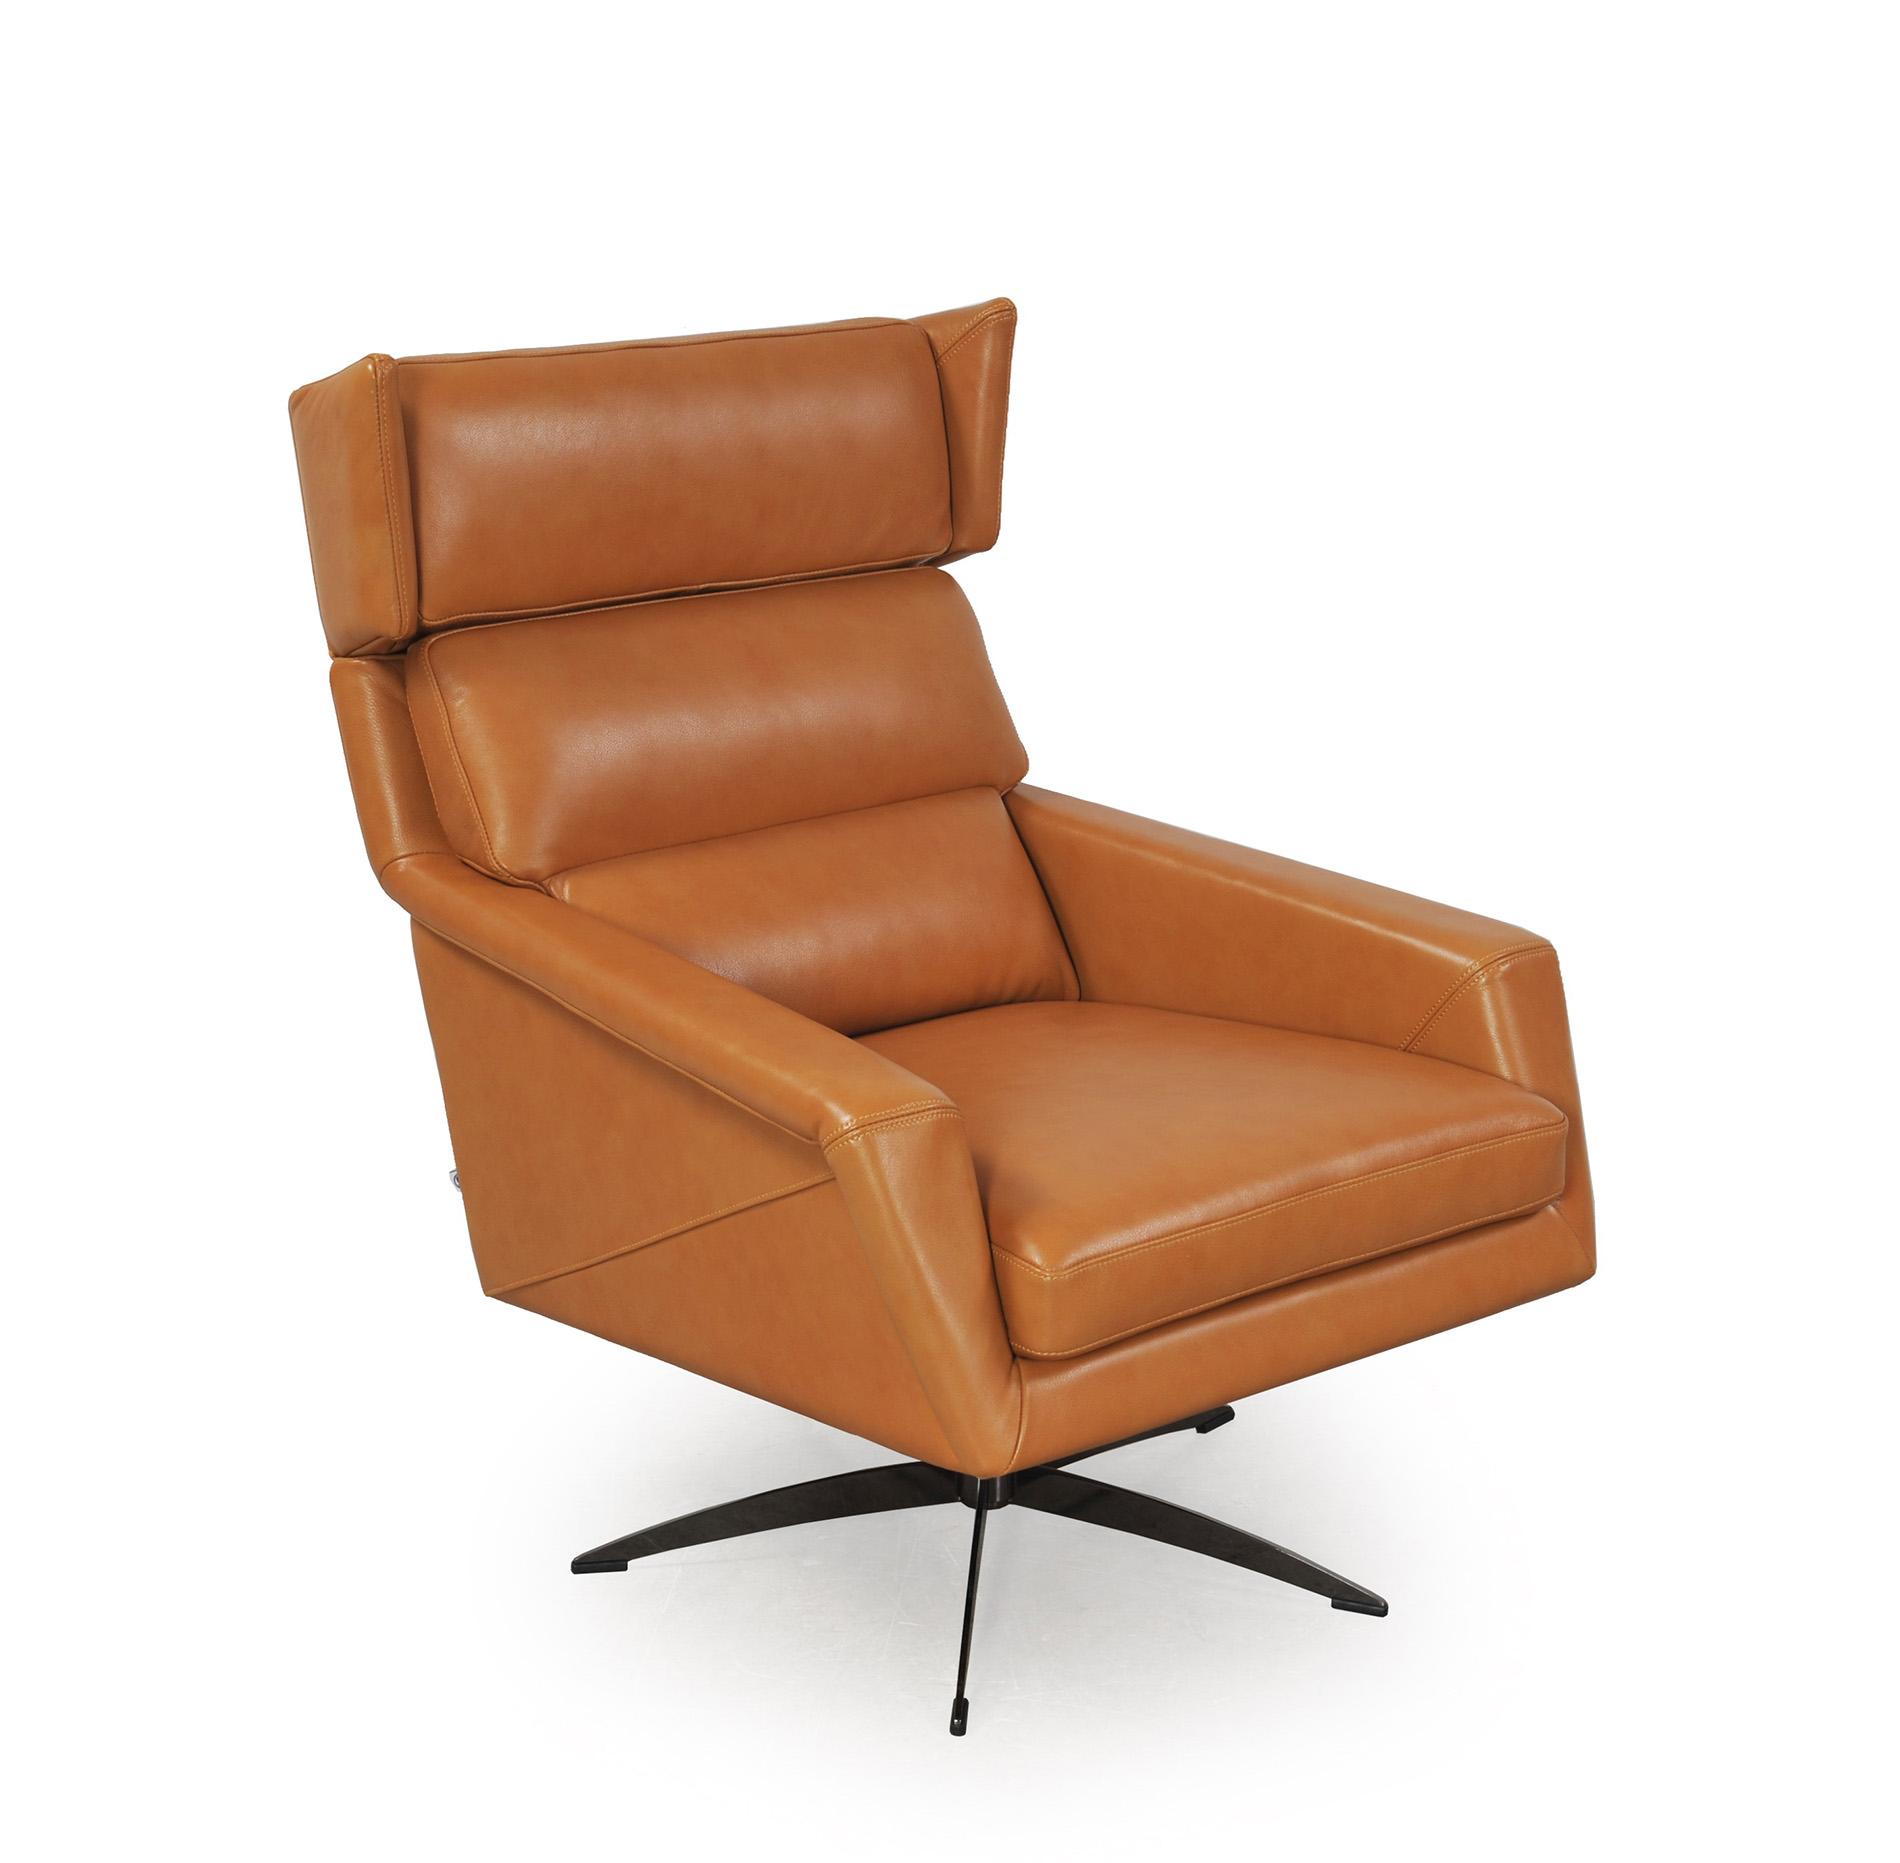 Contemporary, Modern Accent Chair 586 - Hansen 58606D1857 in Tan Top grain leather